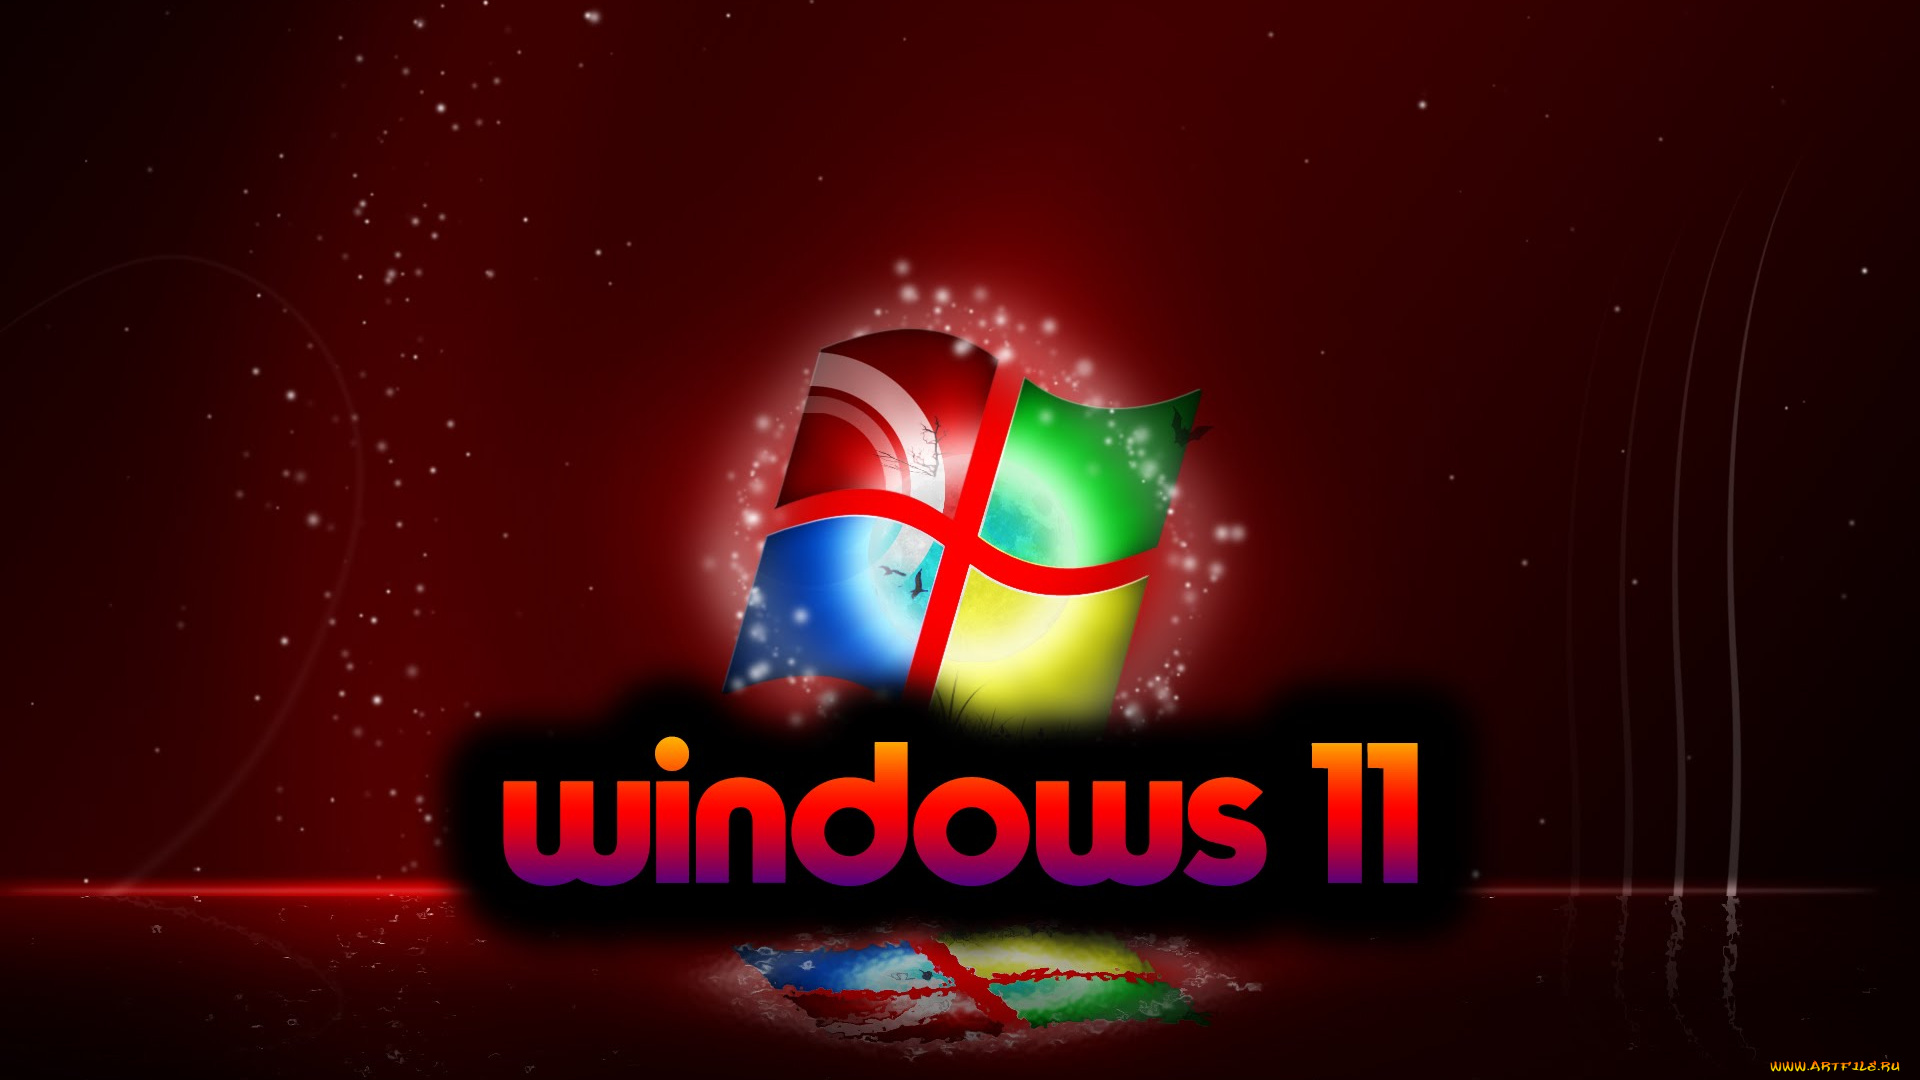 window 11 download free